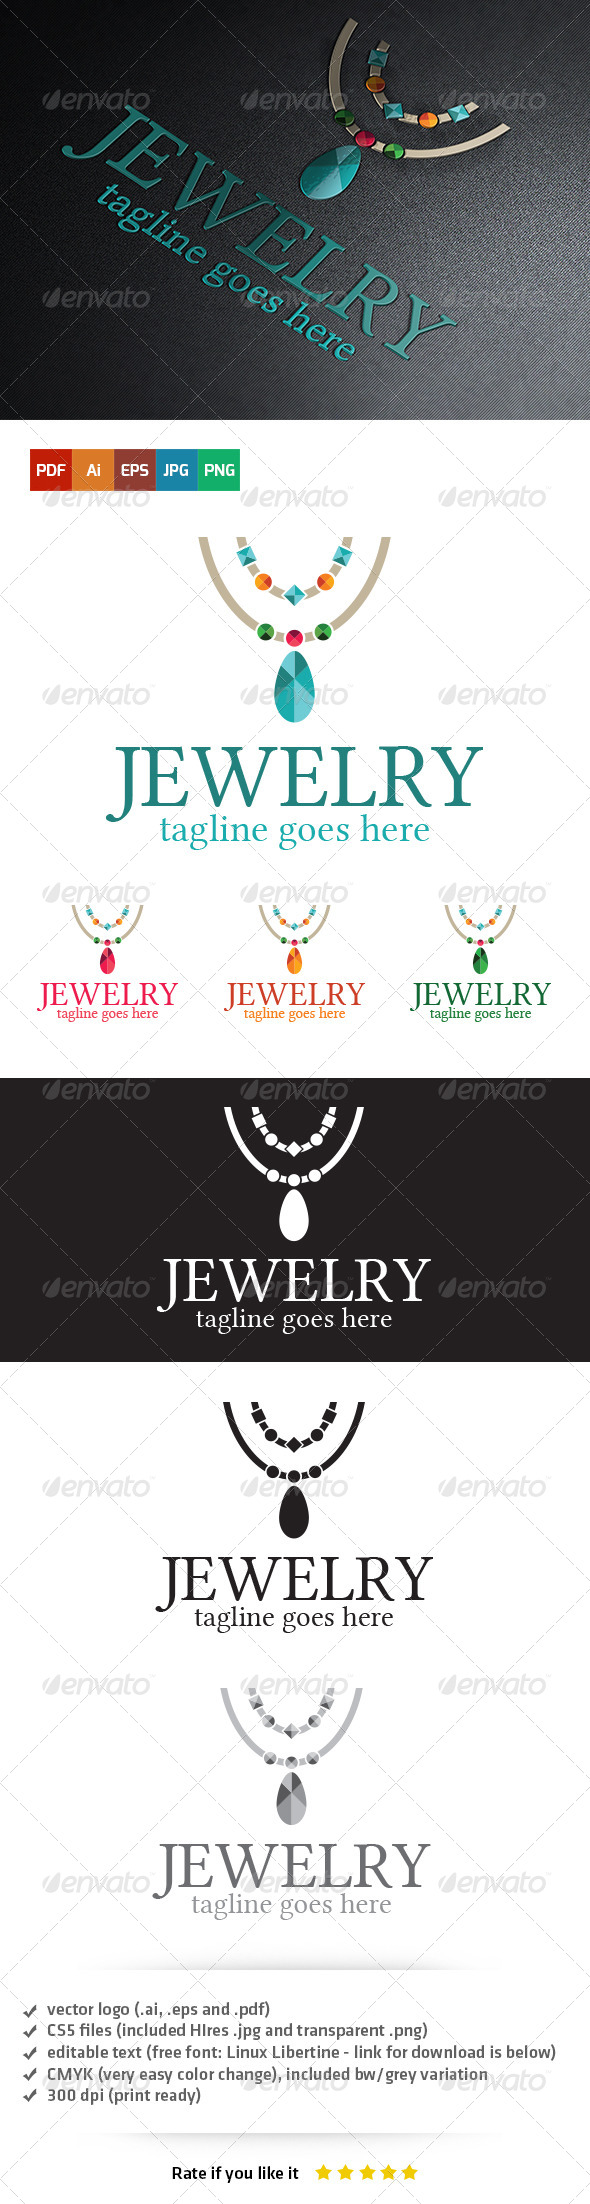 Jewelry Logo by Thinkba | GraphicRiver